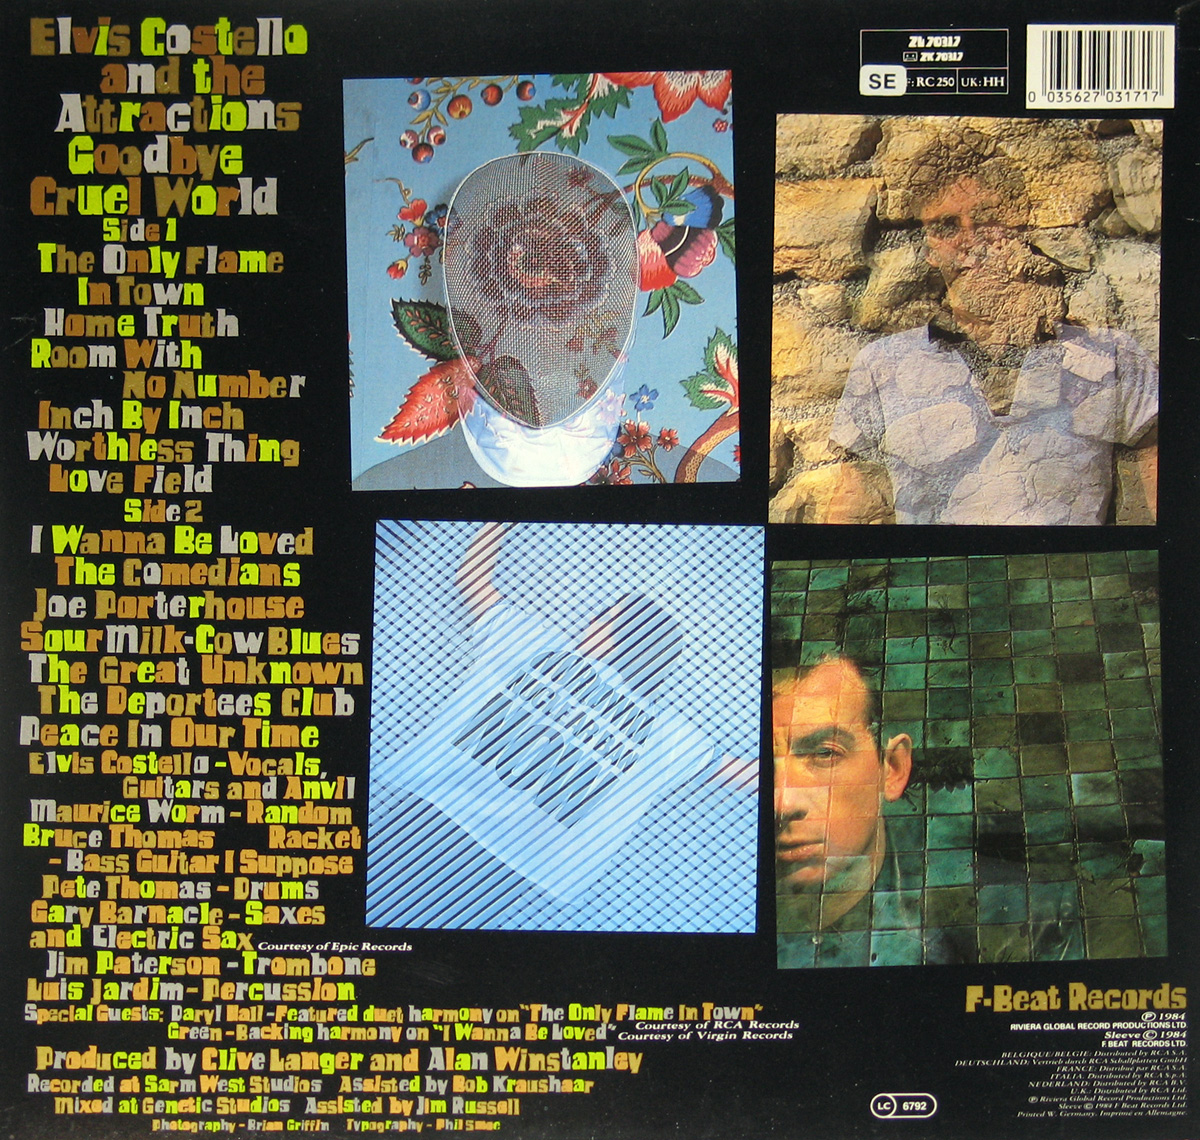 Elvis Costello & The Attractions - Goodbye Cruel World w/Daryl Hall